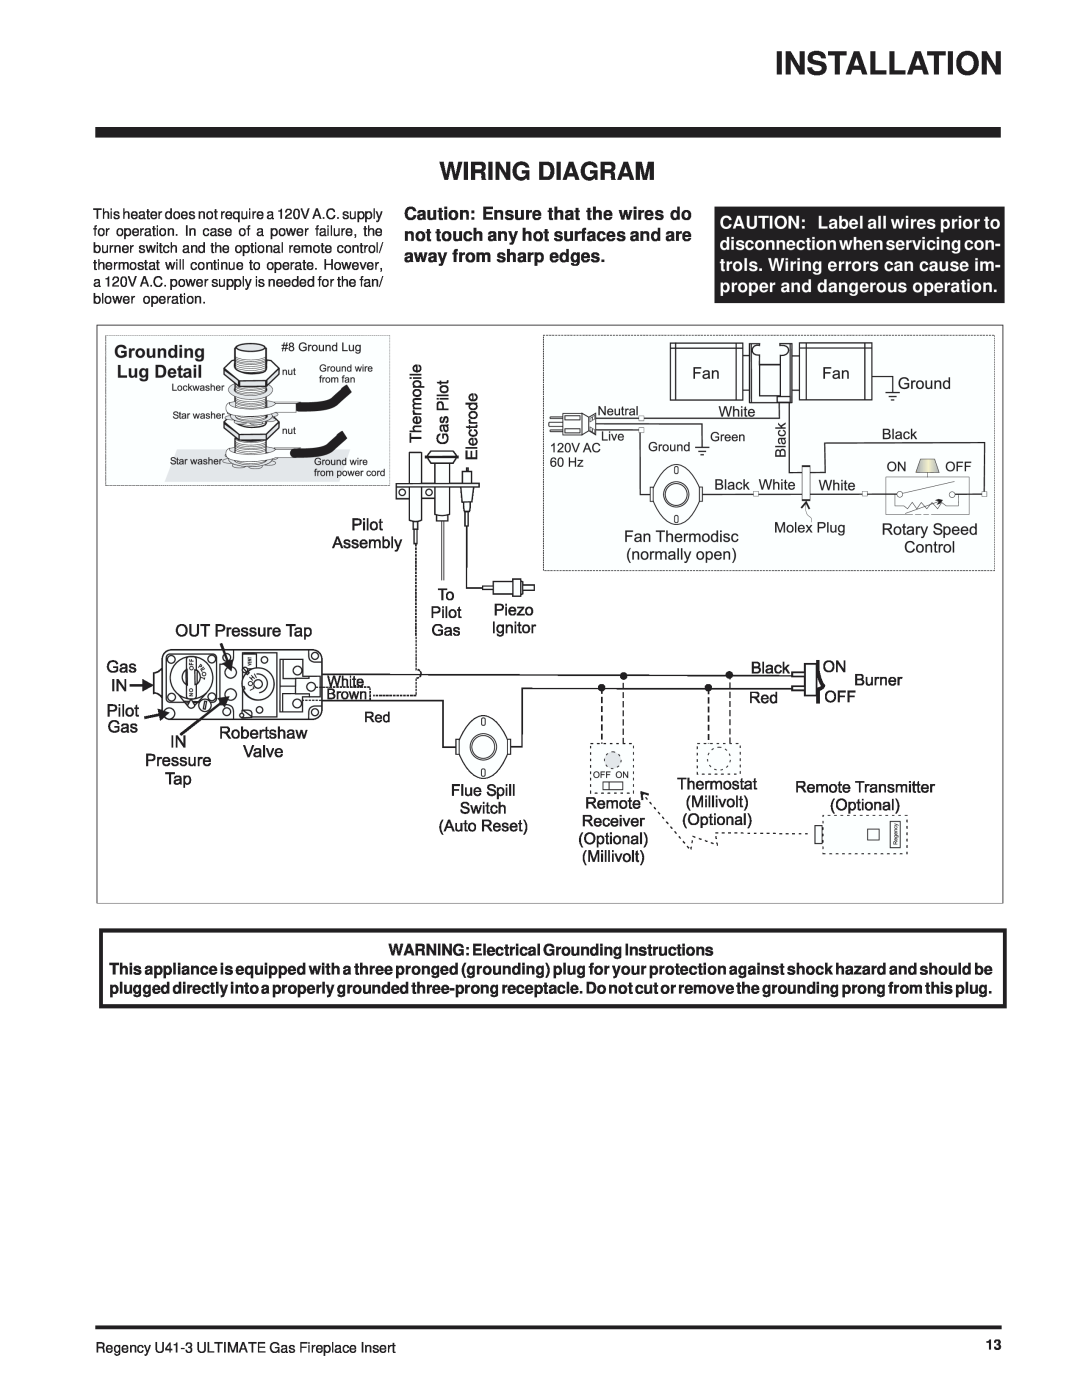 Regency U41-LP3, U41-NG3 installation manual Wiring Diagram, WARNING: Electrical Grounding Instructions 